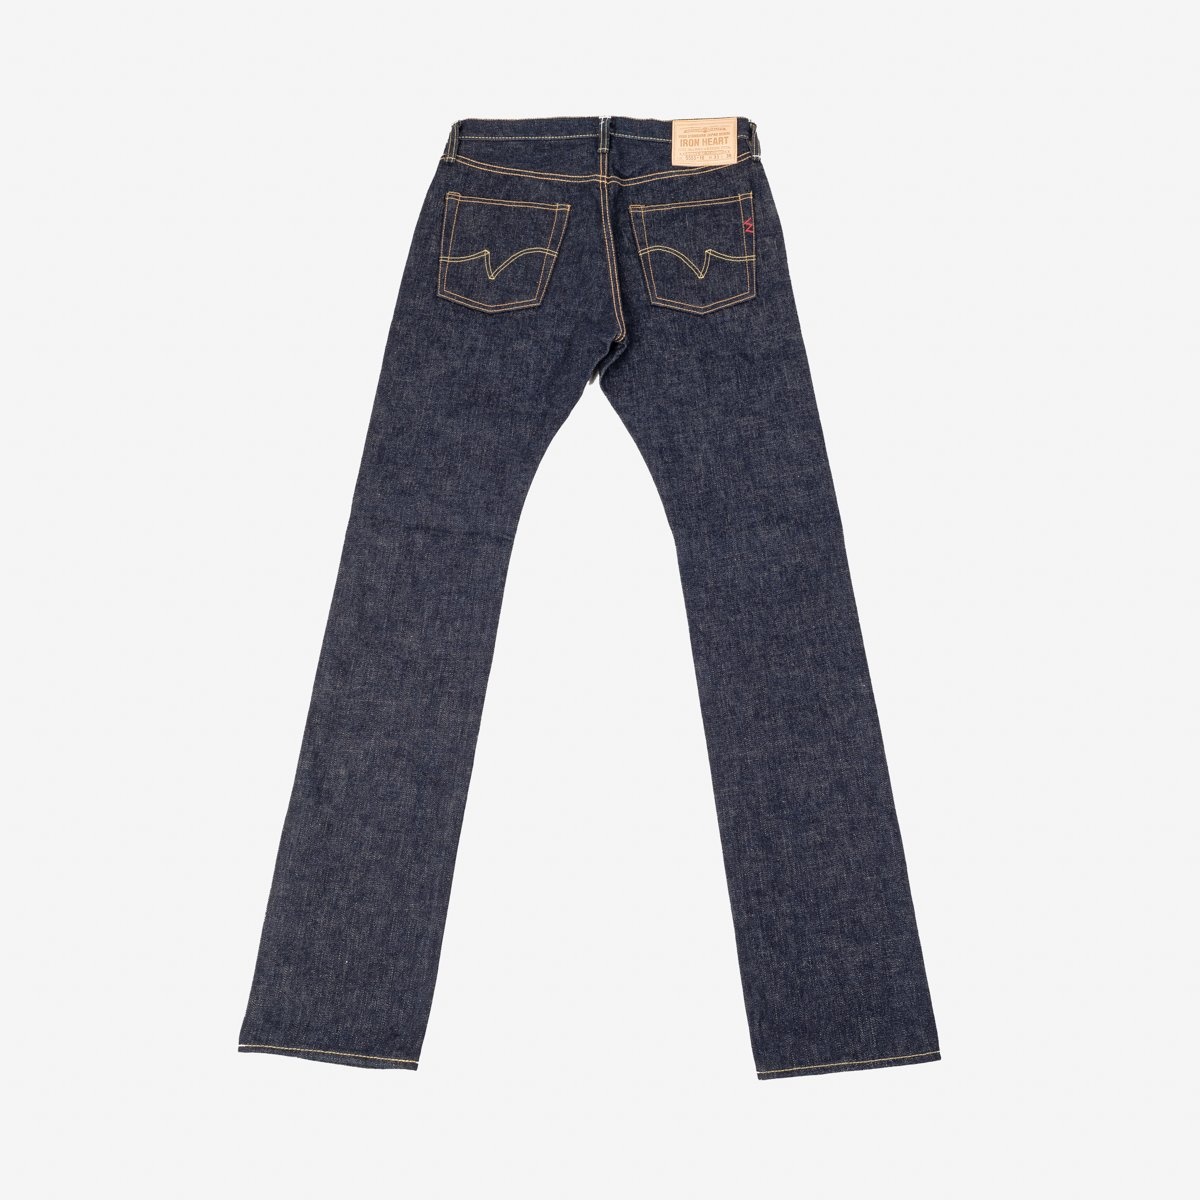 IH-555S-18 18oz Vintage Selvedge Denim Super Slim Cut Jeans - Indigo - 5